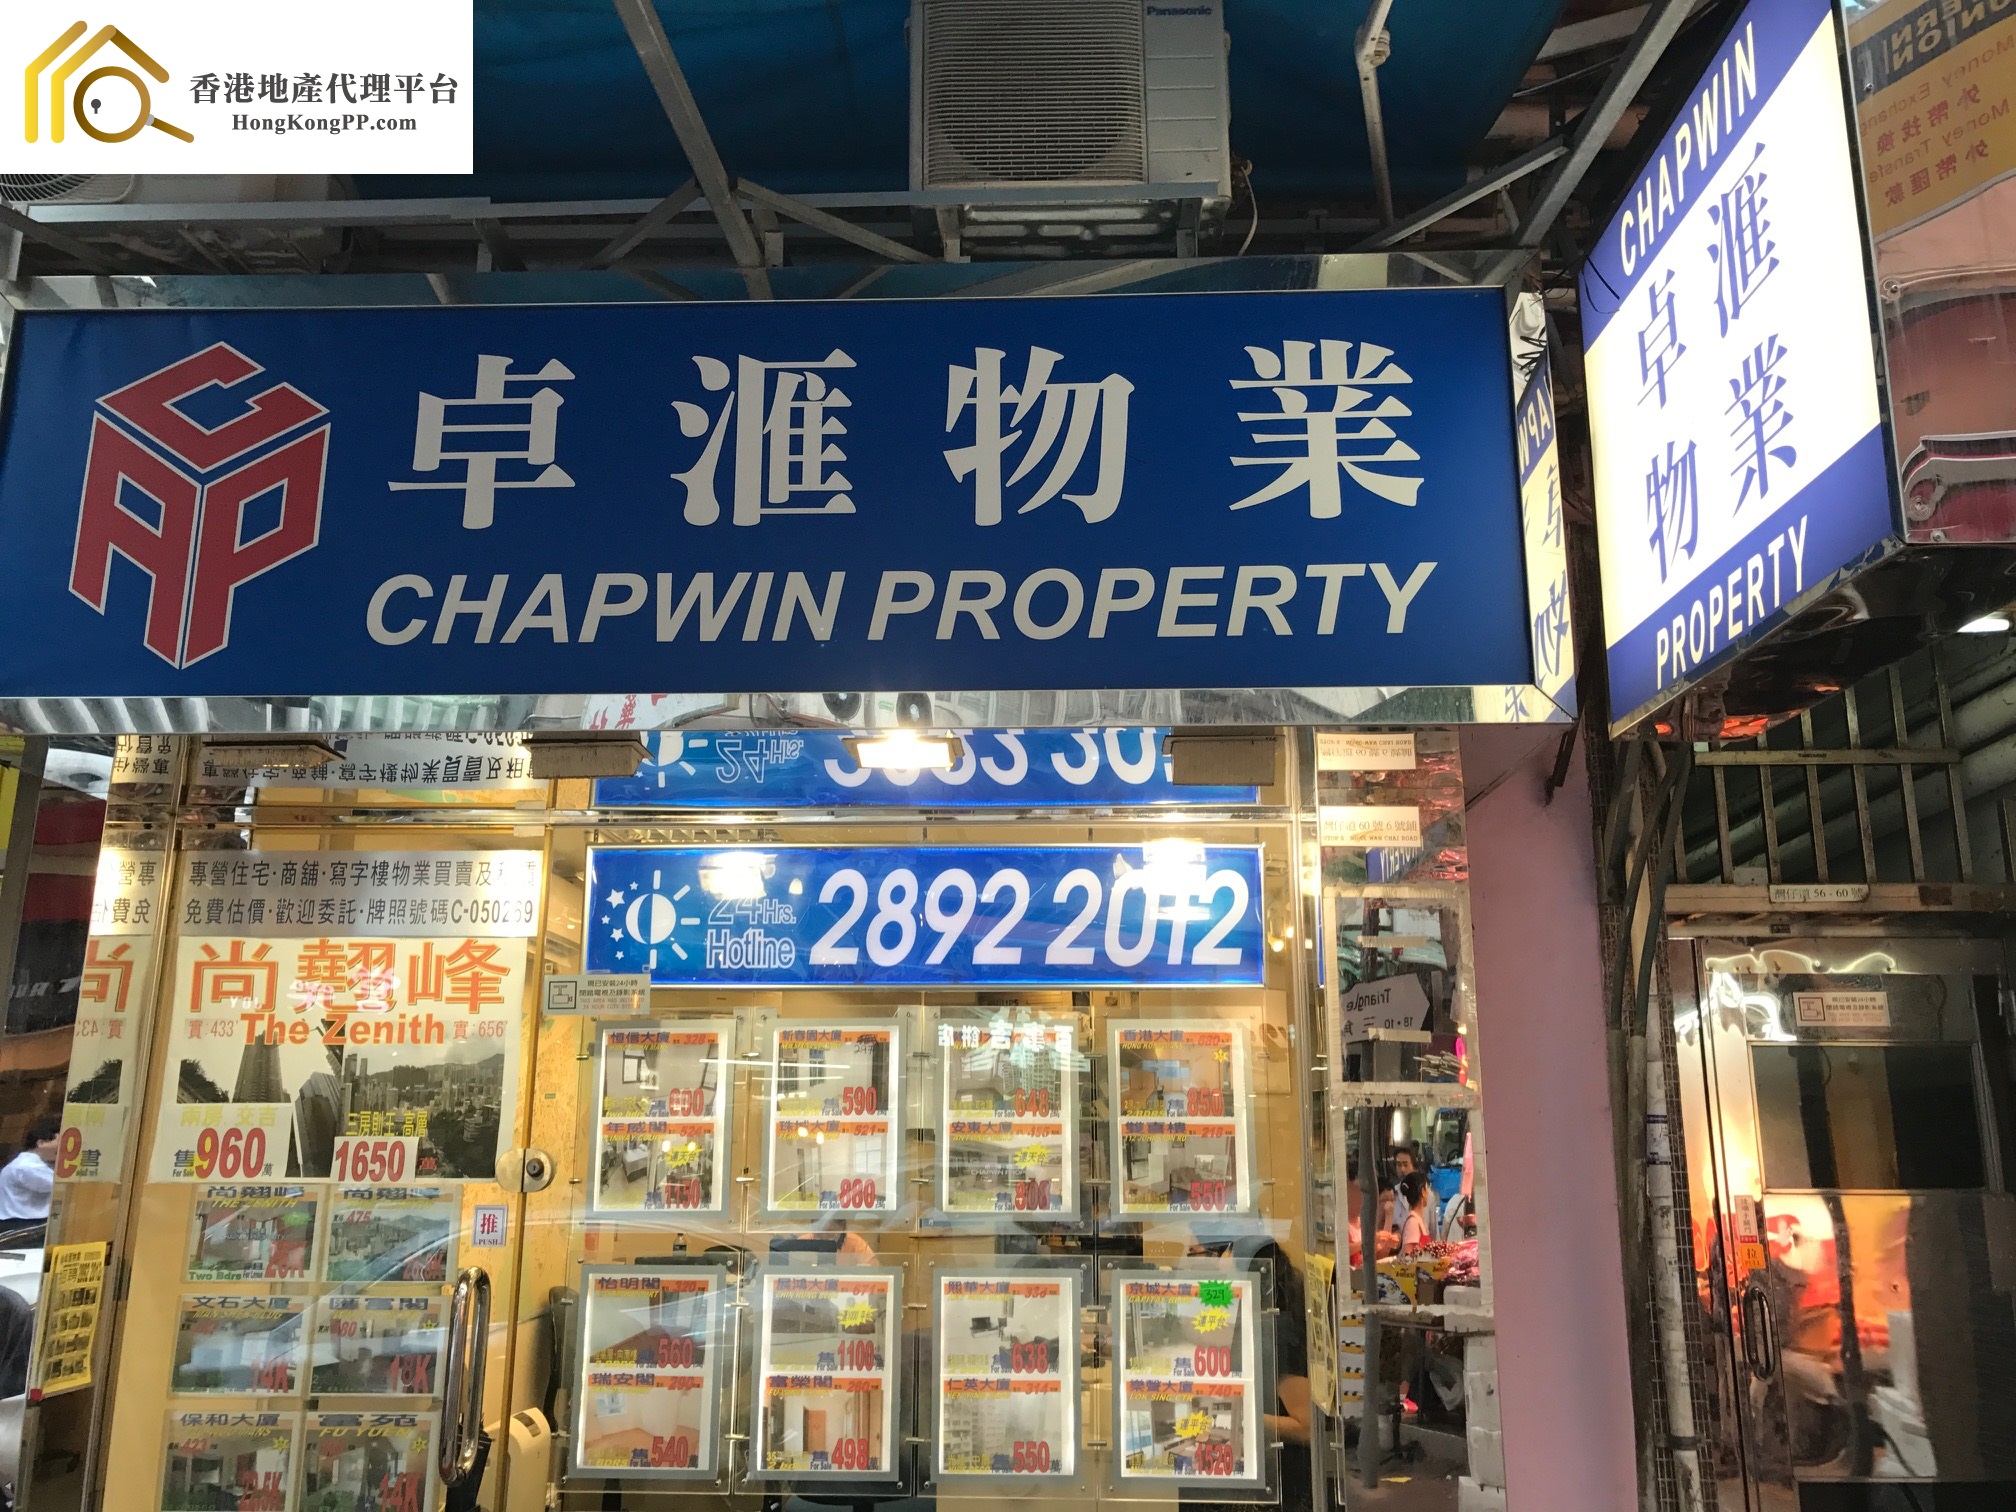 ShopEstate Agent: 卓匯物業 Chapwin Property Agency